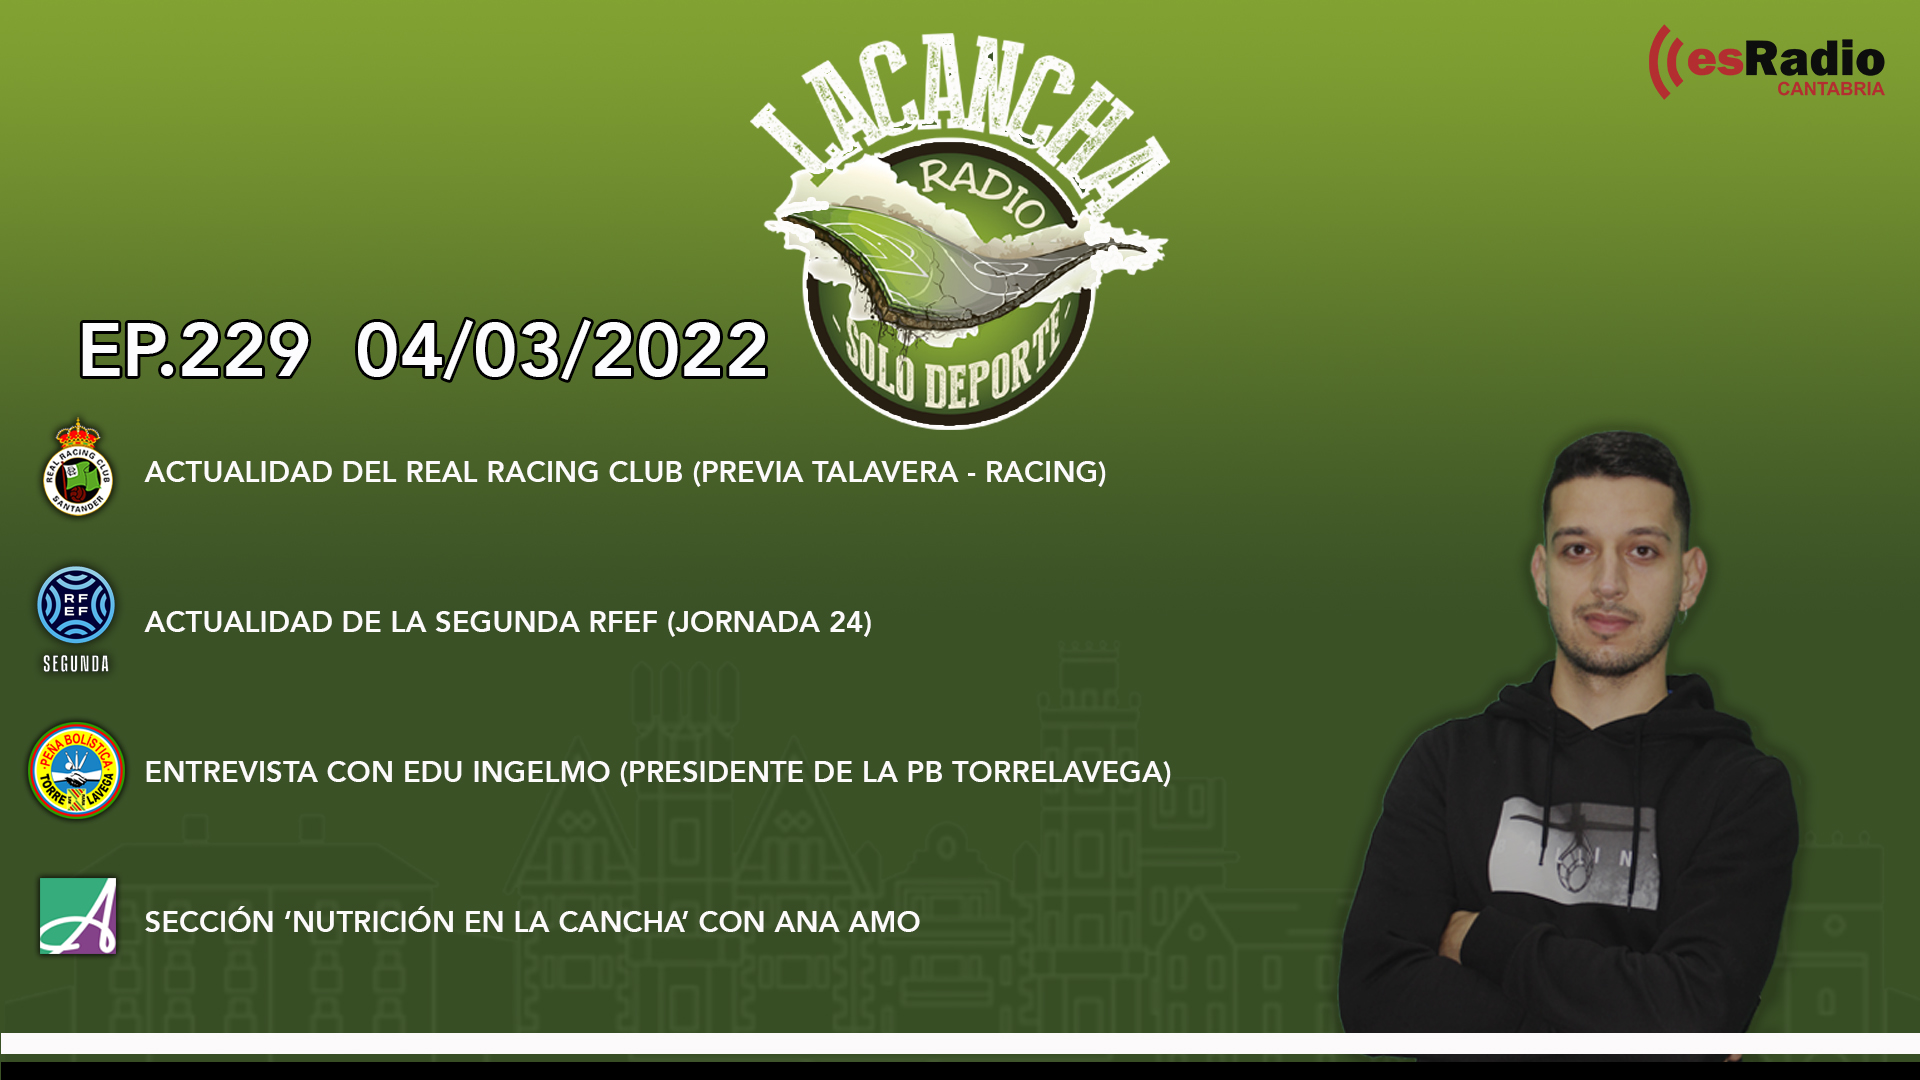 La Cancha Ep. 229 (04/03/2022)